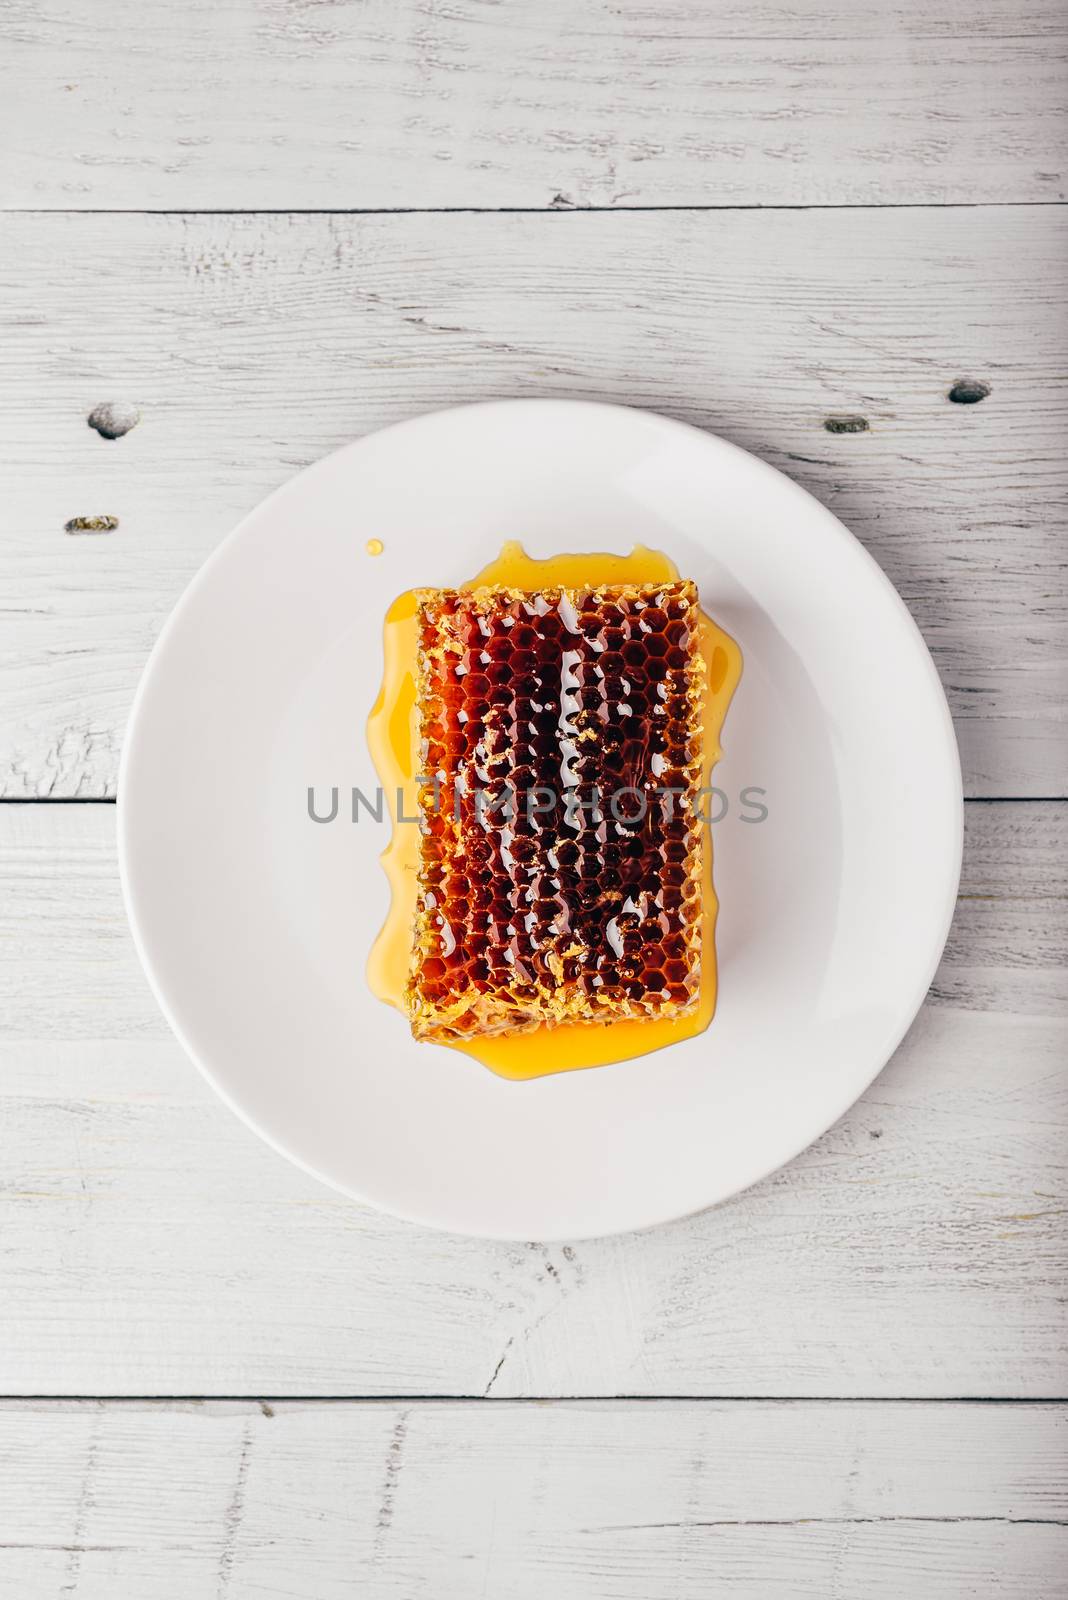 Honeycomb on white plate by Seva_blsv